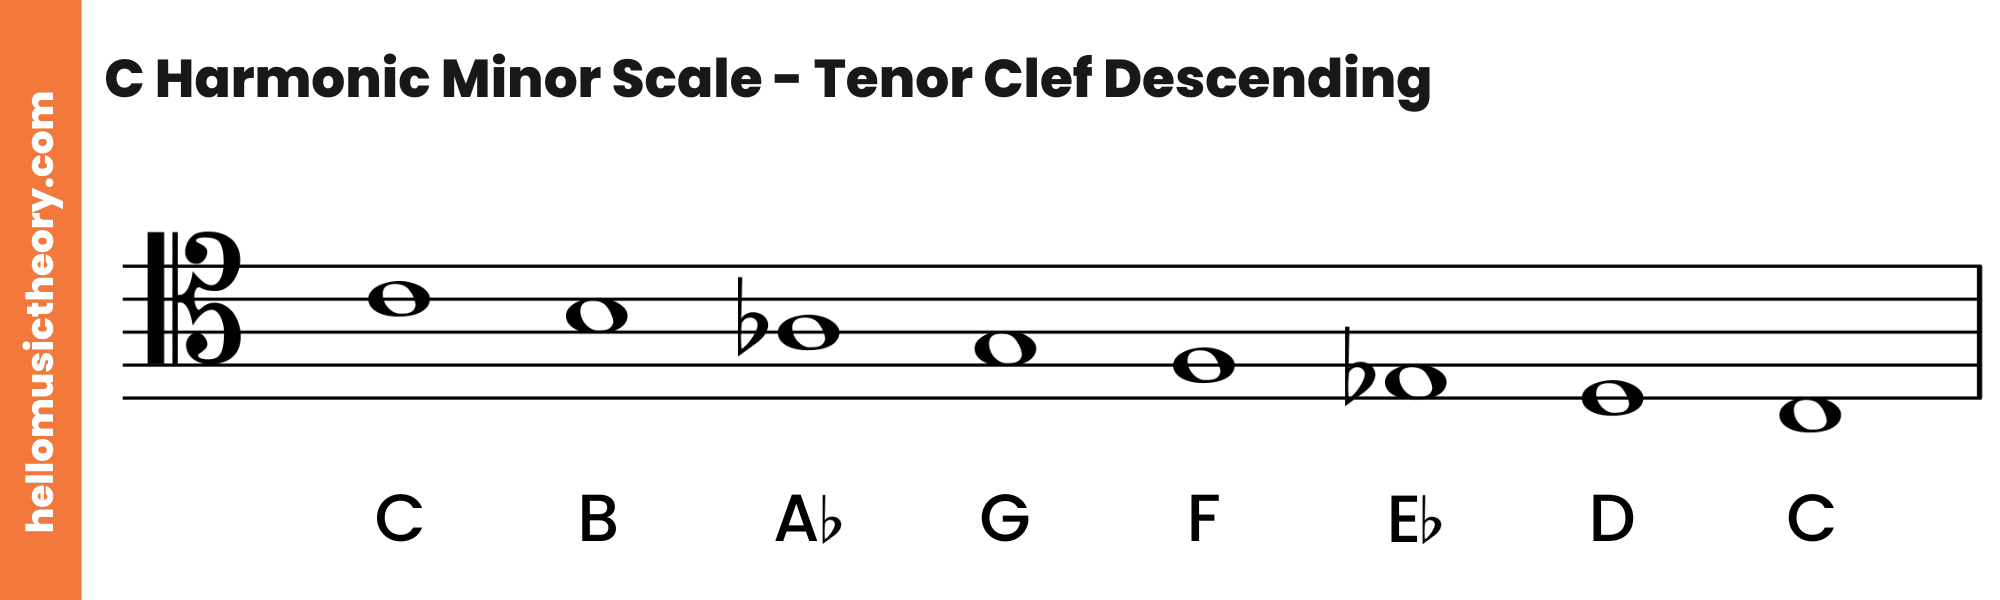 C Harmonic Minor Scale Tenor Clef Descending